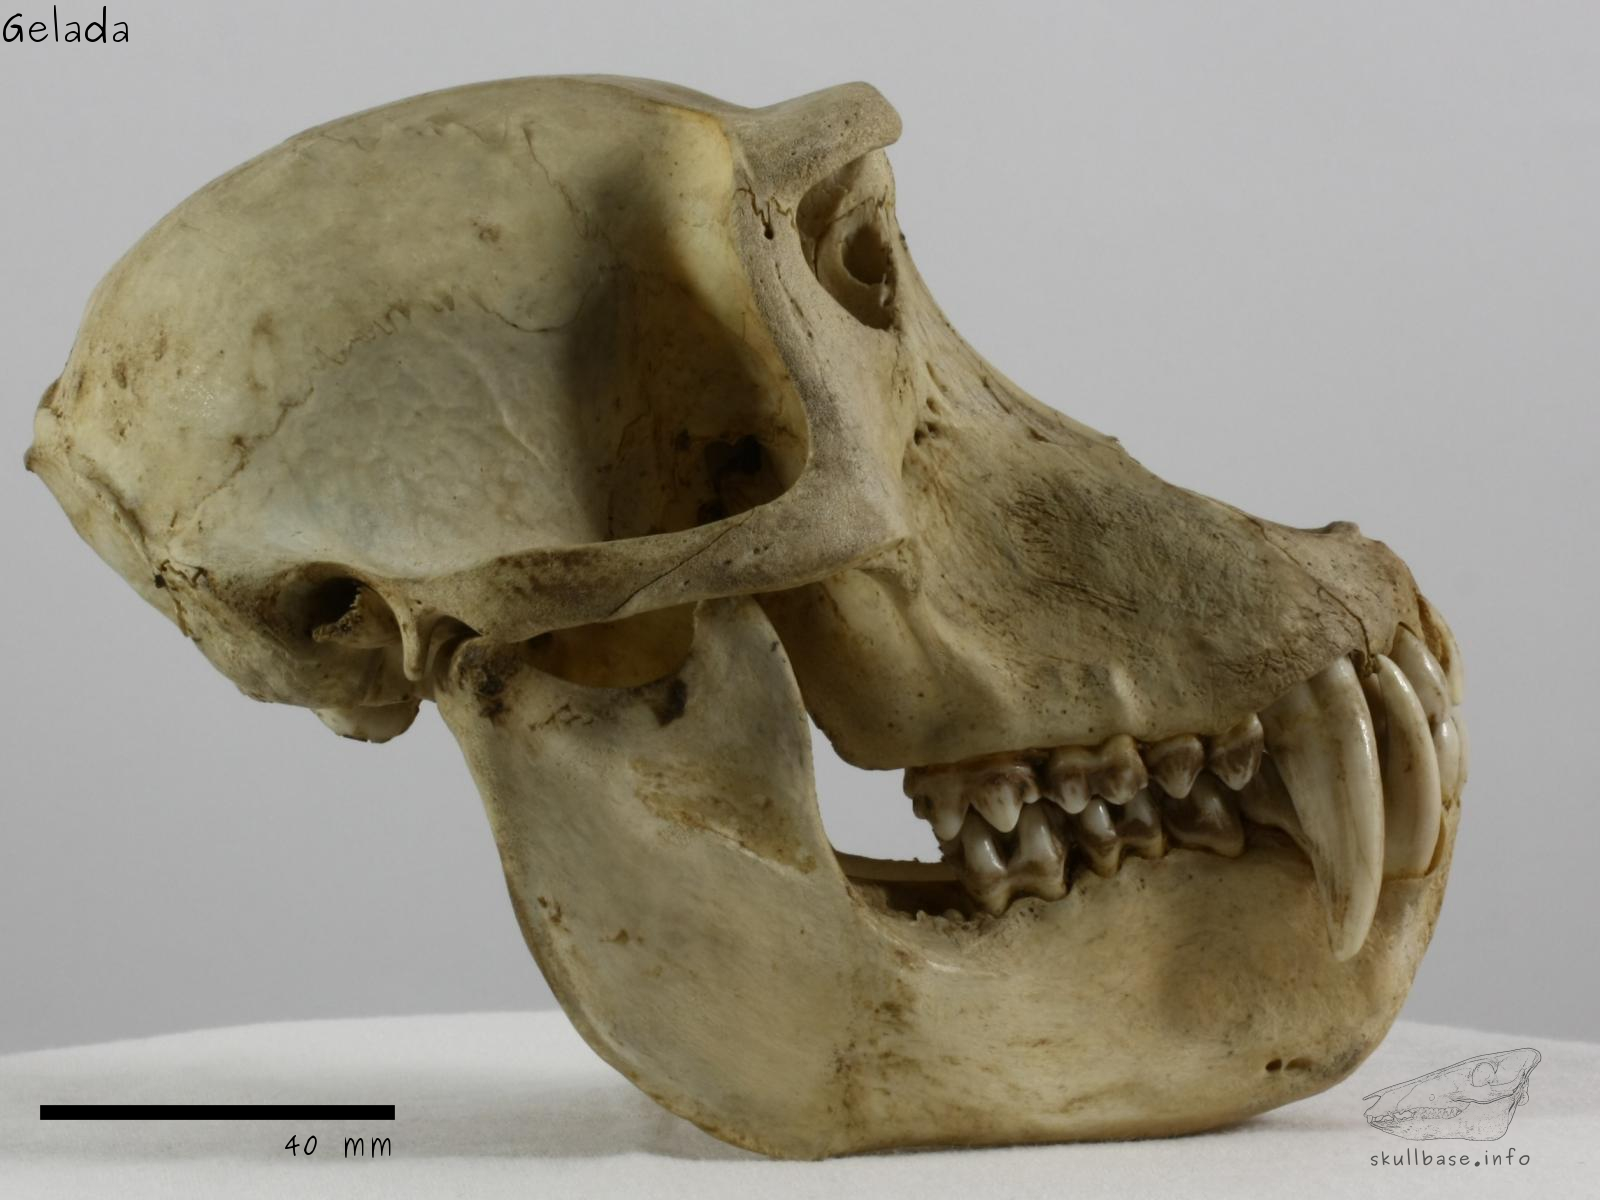 Gelada (Theropithecus gelada) skull lateral view